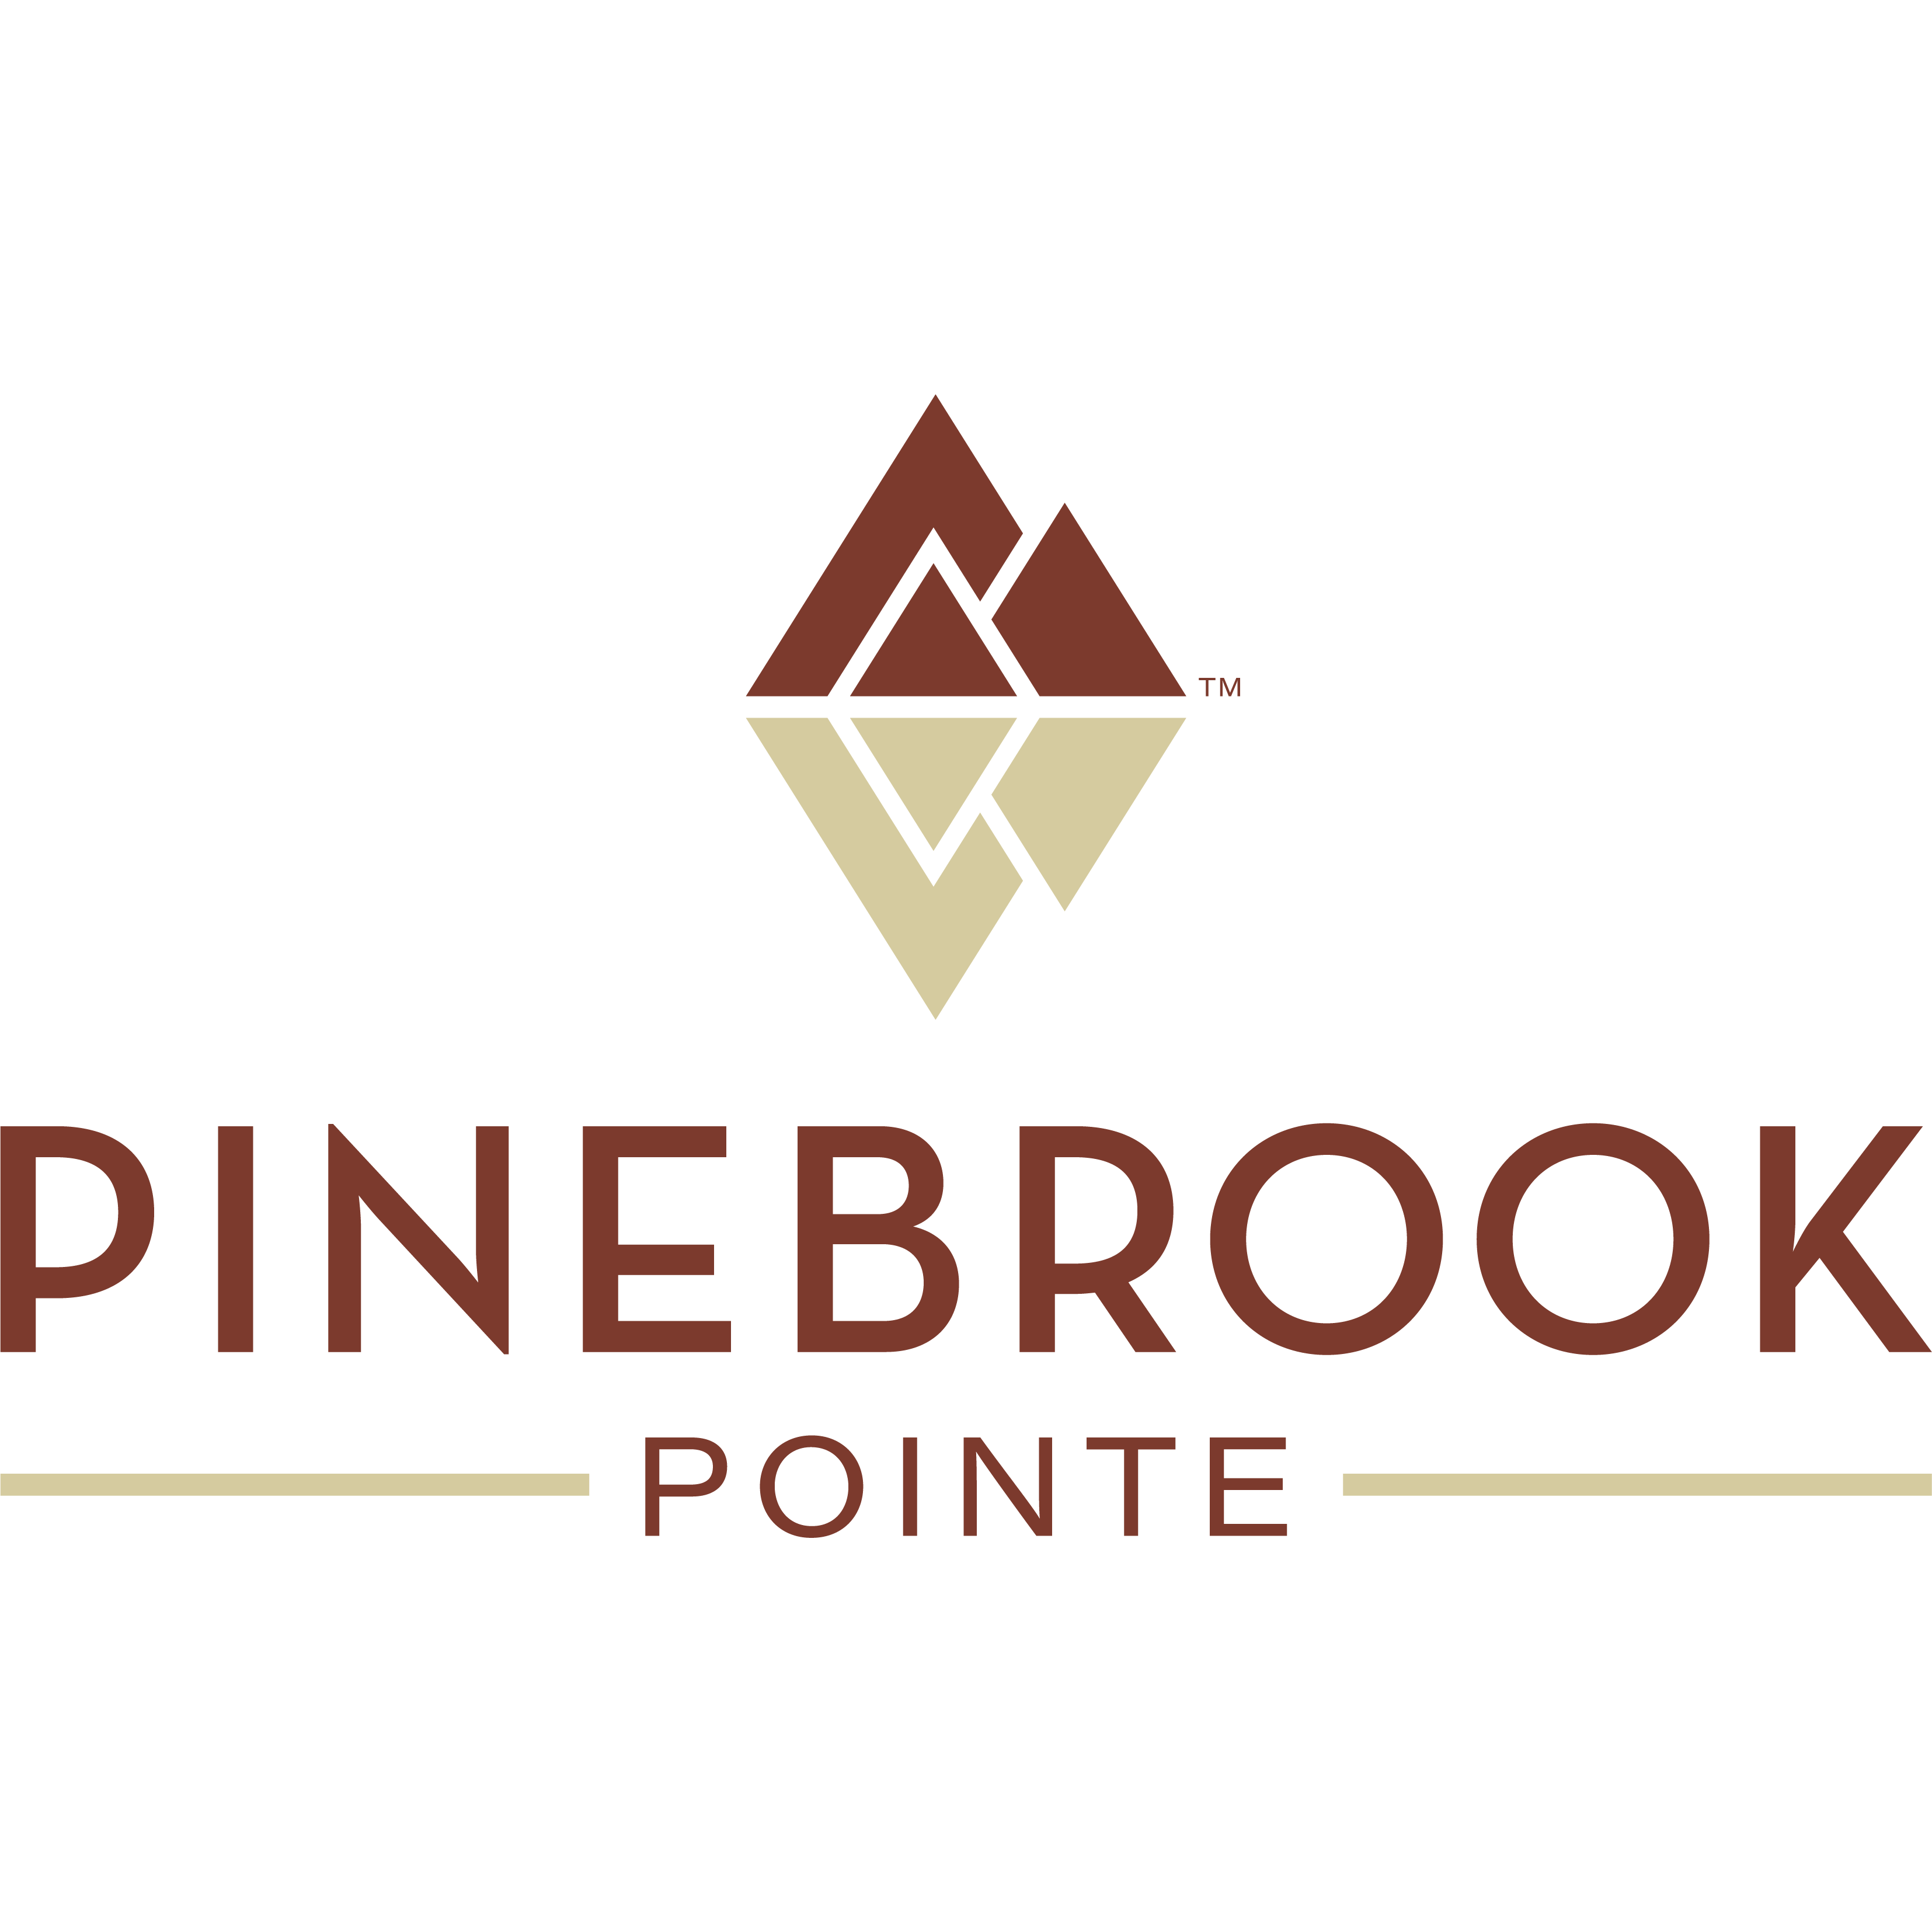 Pinebrook Pointe